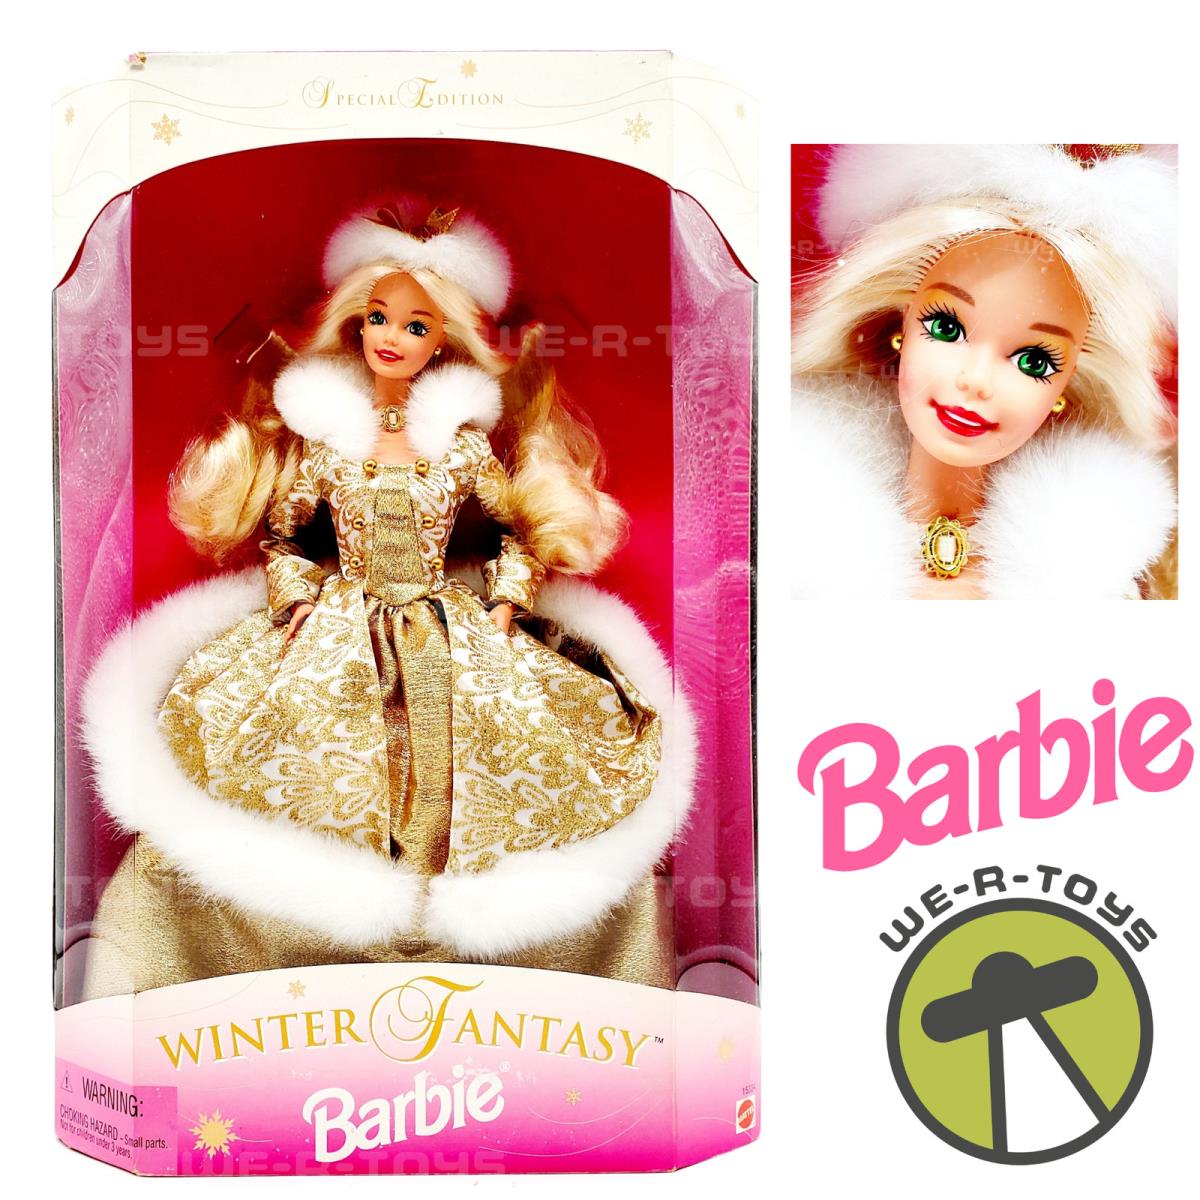 1995 Winter Fantasy Barbie Doll Blonde Special Edition Sam`s Club Exclusive